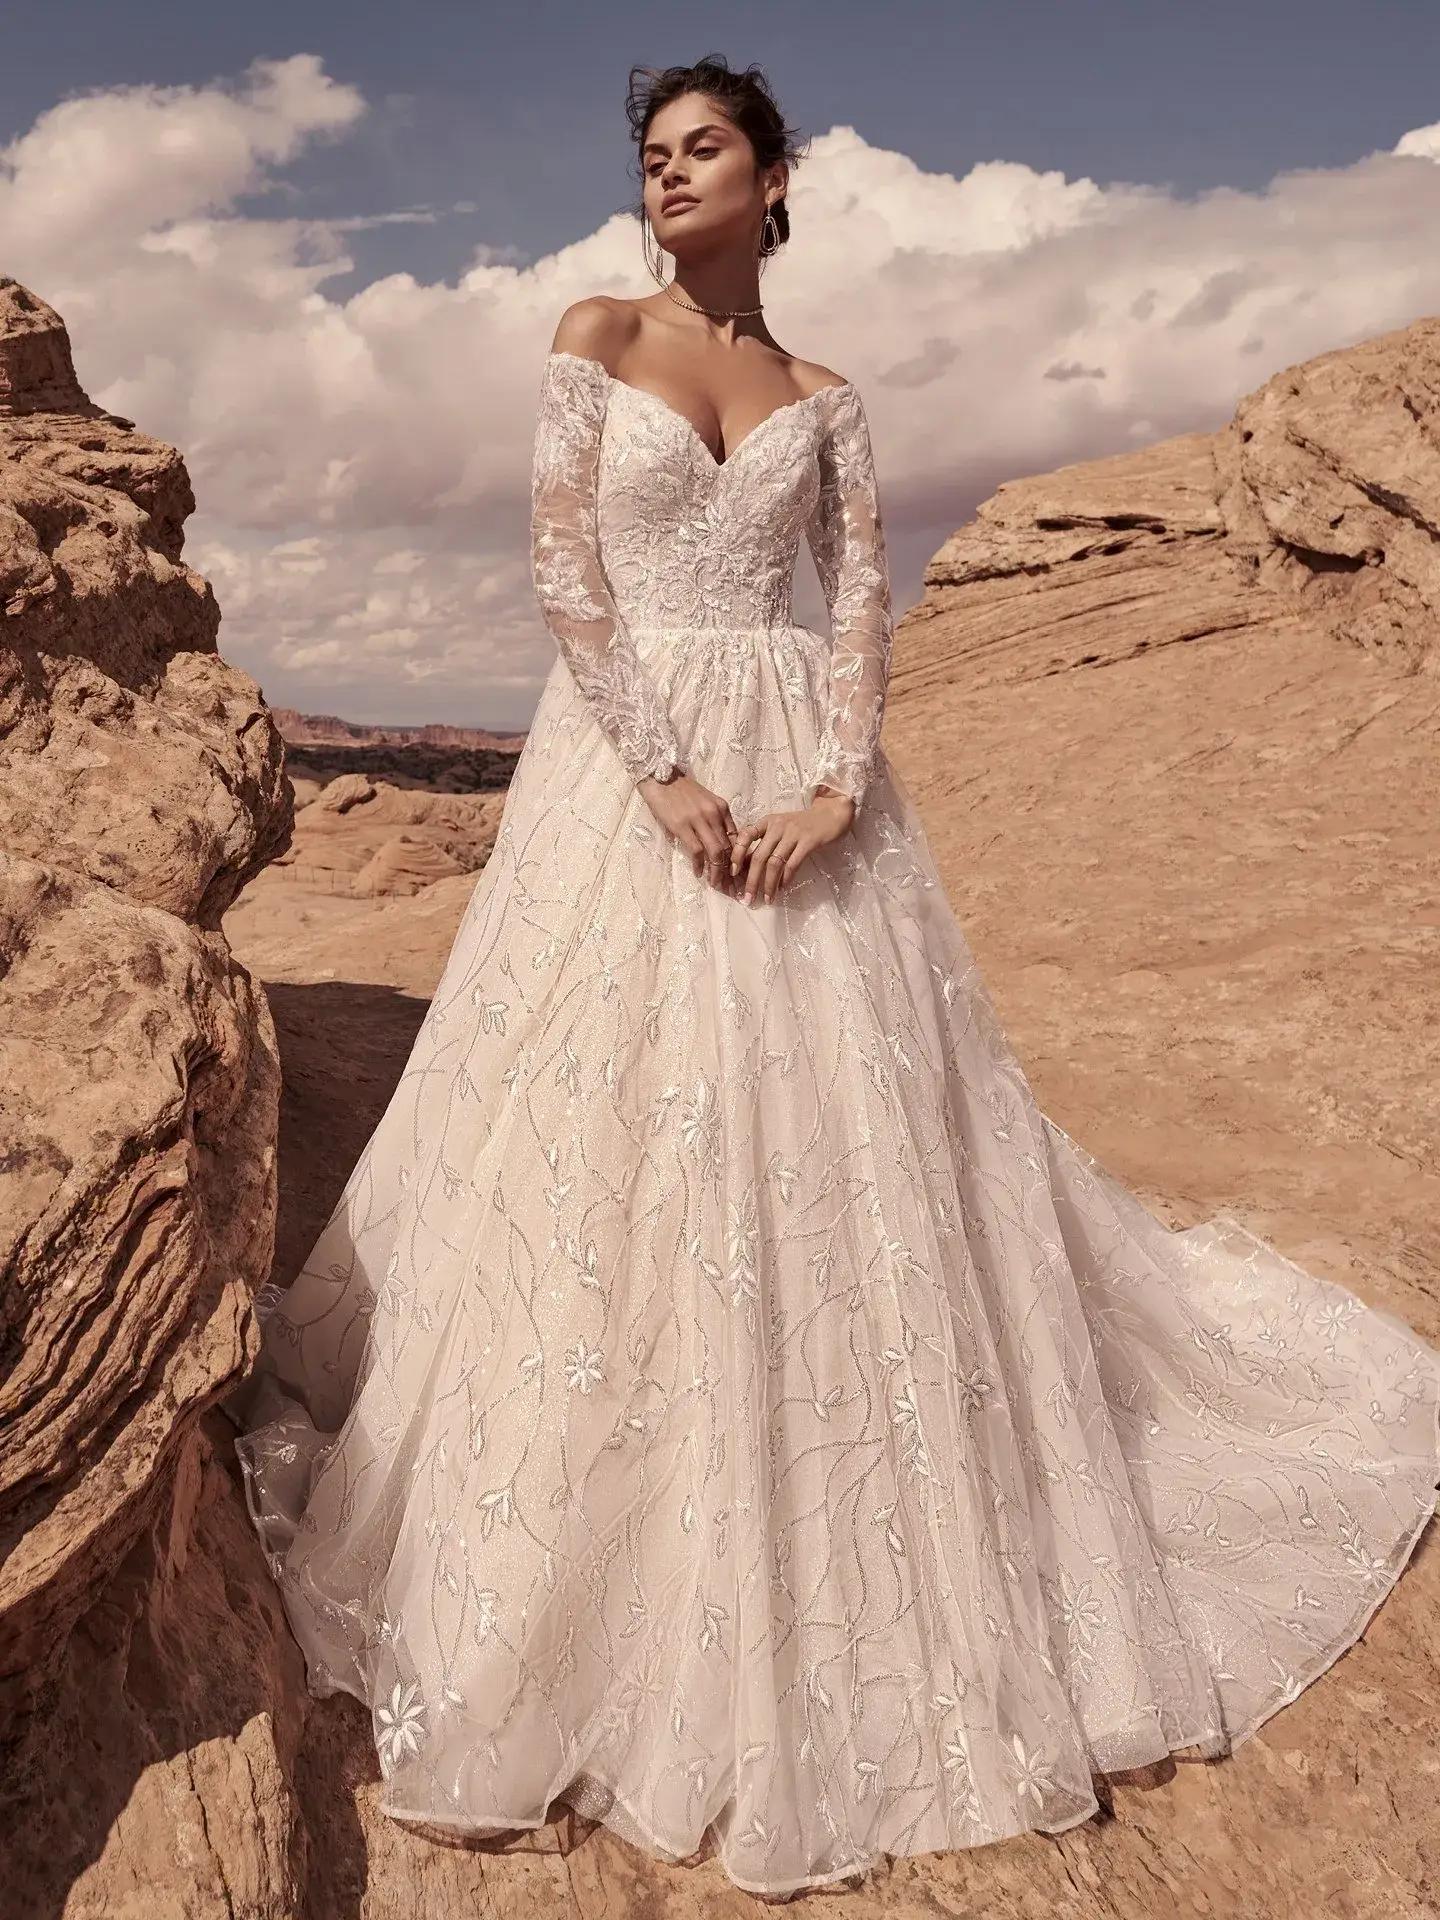 Crystal and Sequin Embellishments: Sparkling Details for Winter Wedding Dresses. Mobile Image